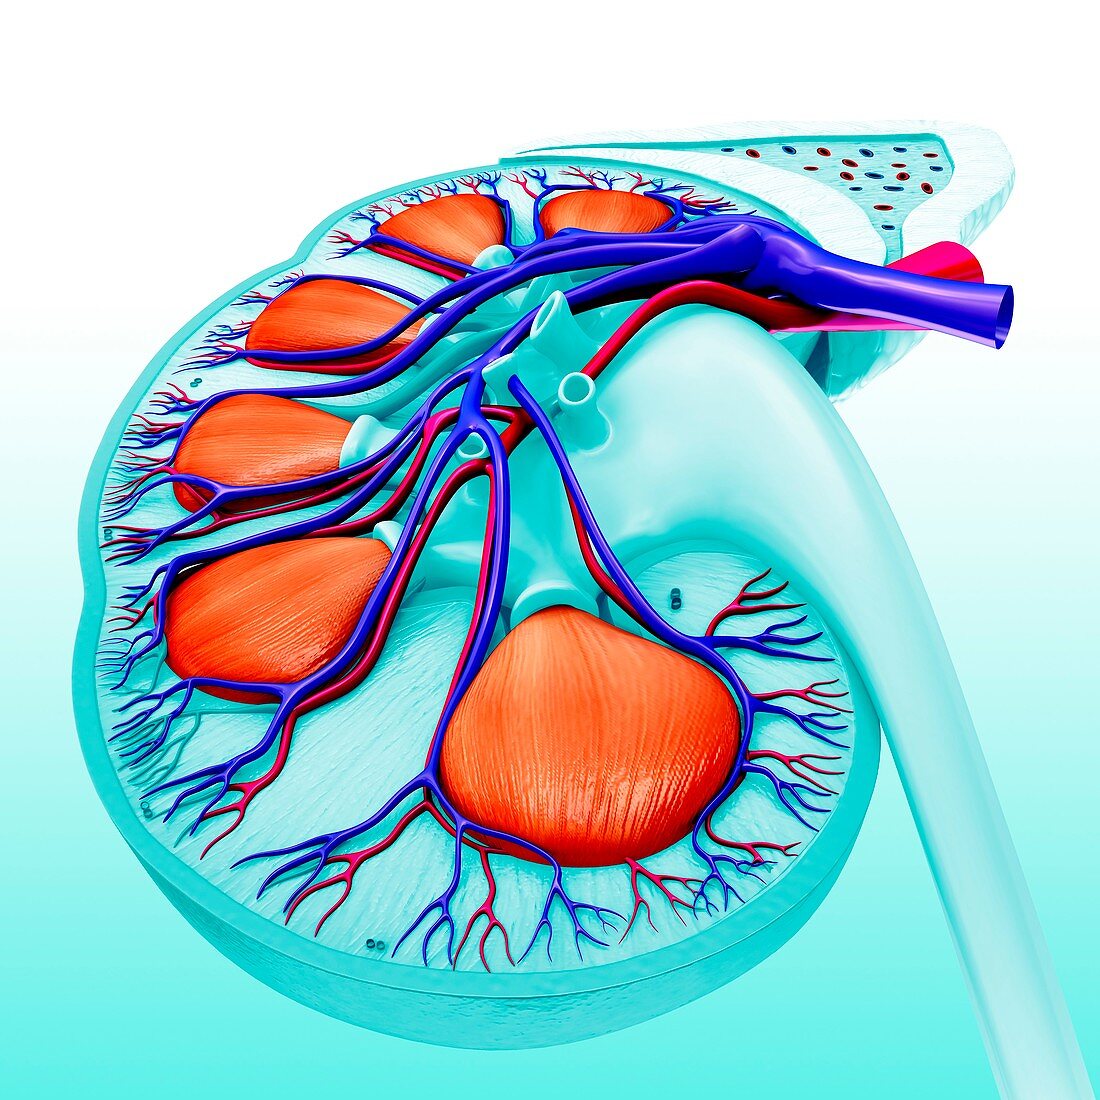 Nephrons of human kidney,illustration